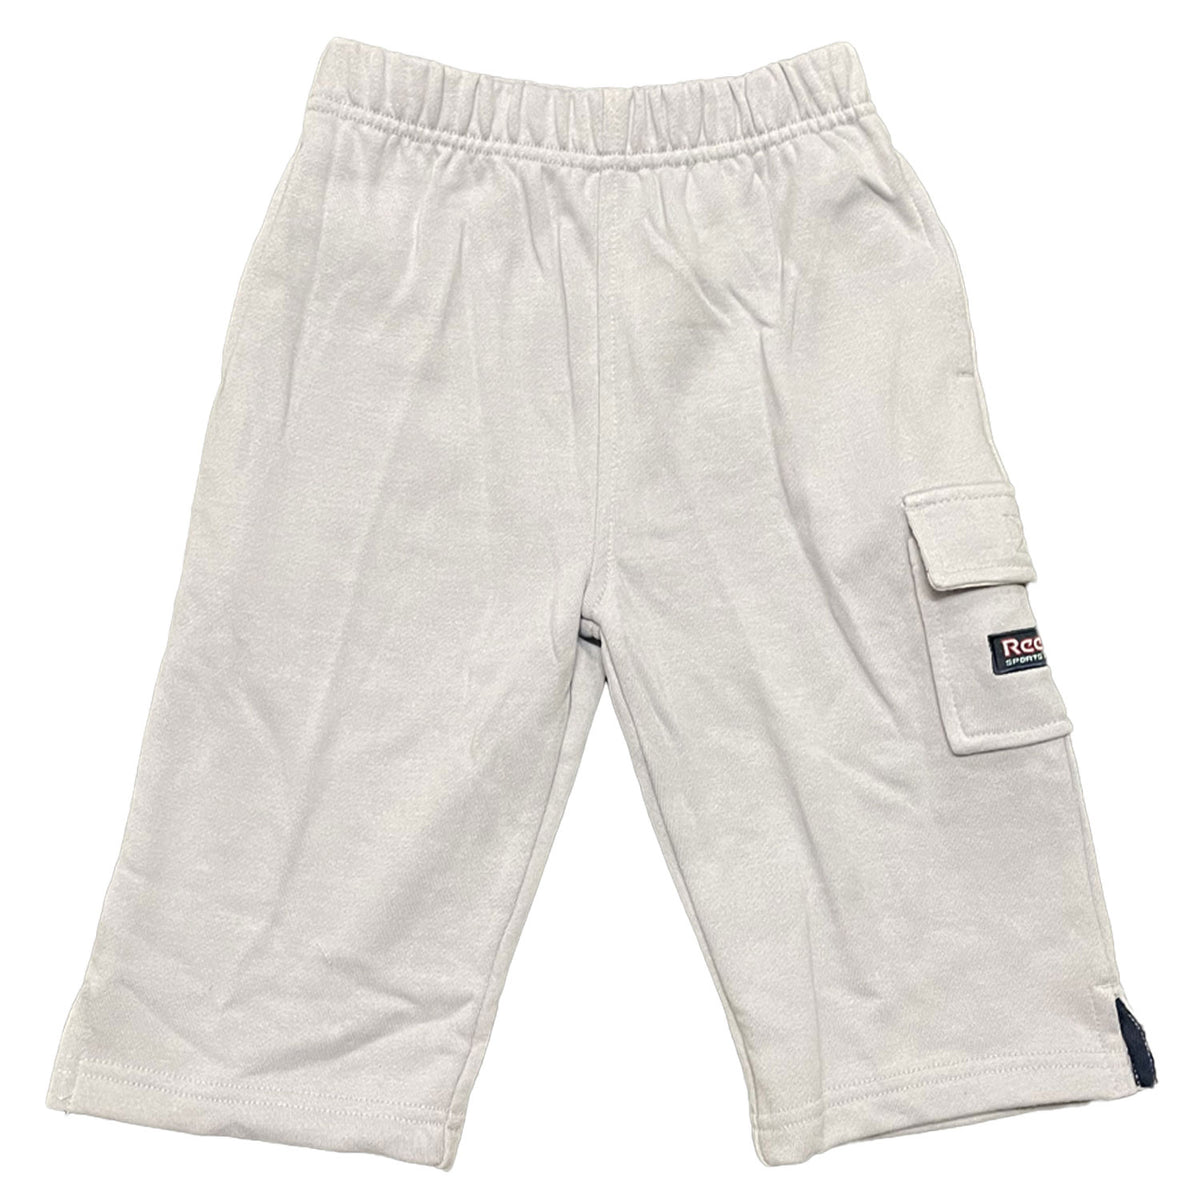 Reebok's Infant Sports 3/4 Length Shorts